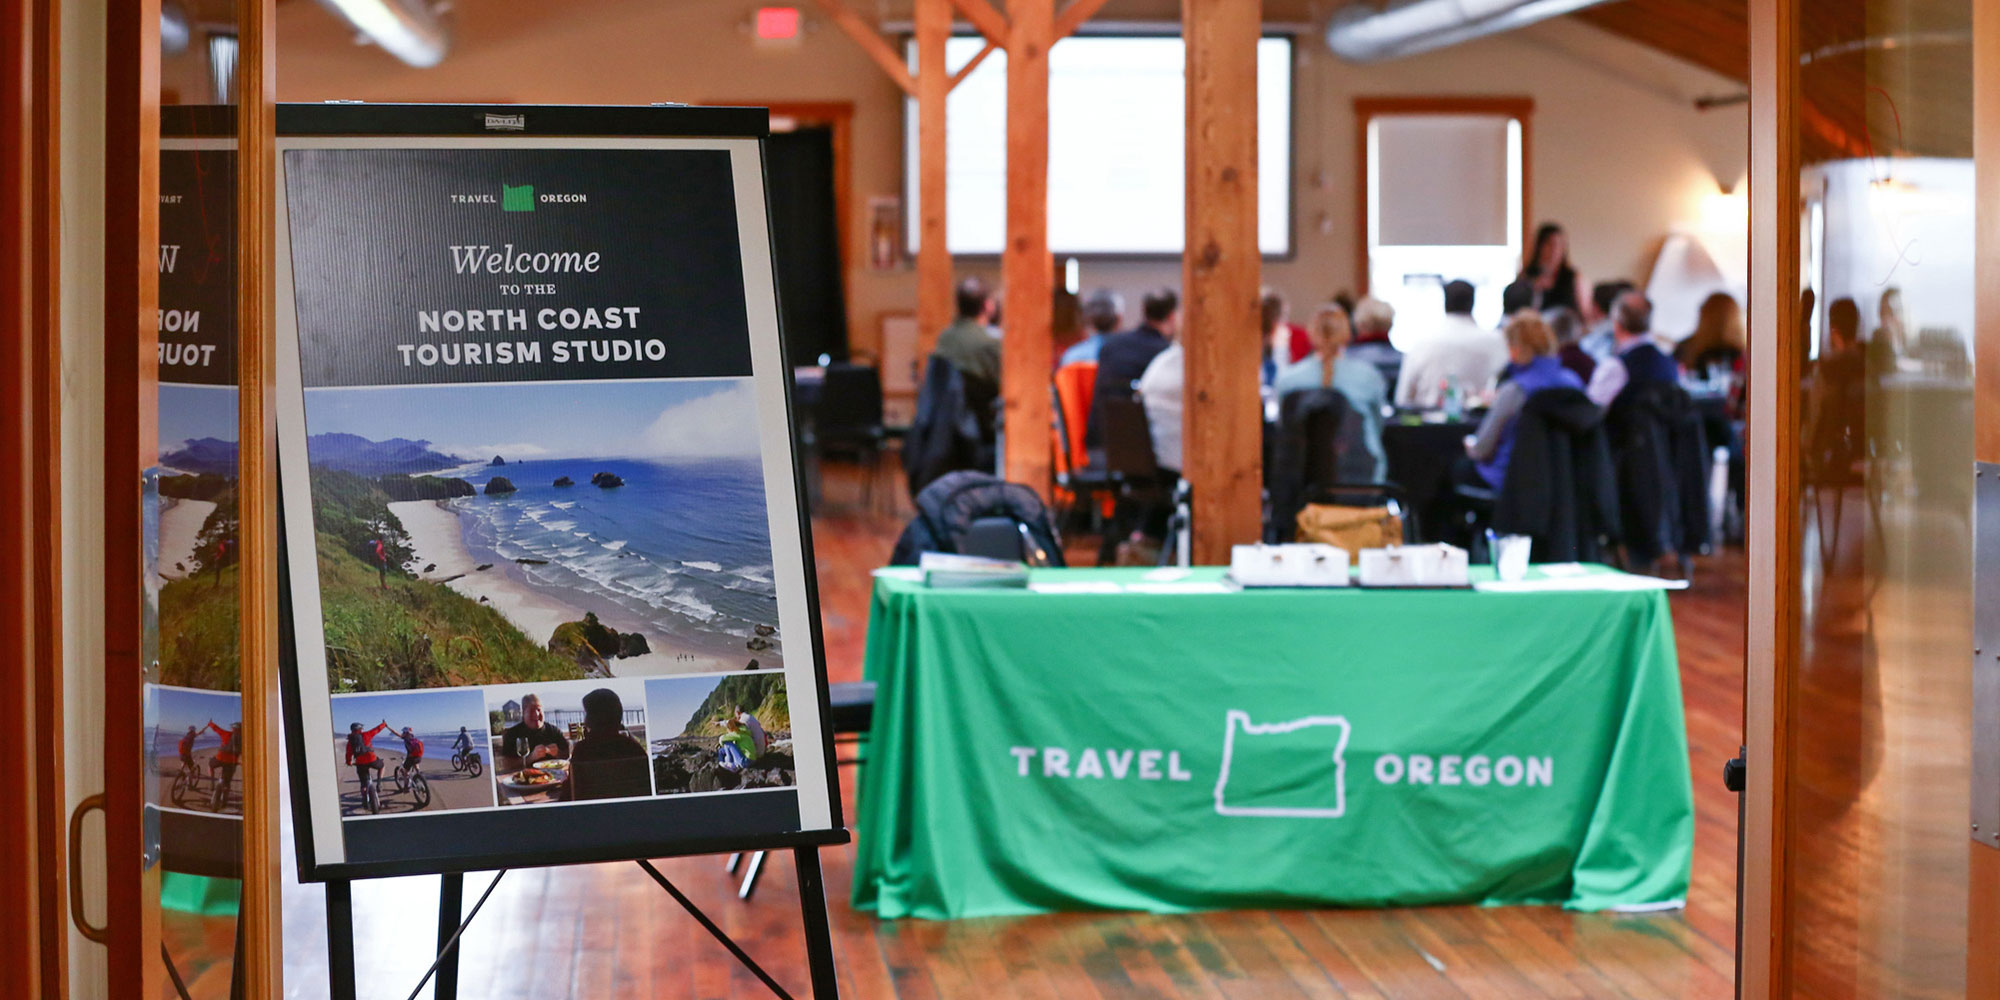 Astoria Travel Oregon - North Coast Tourism Management Network